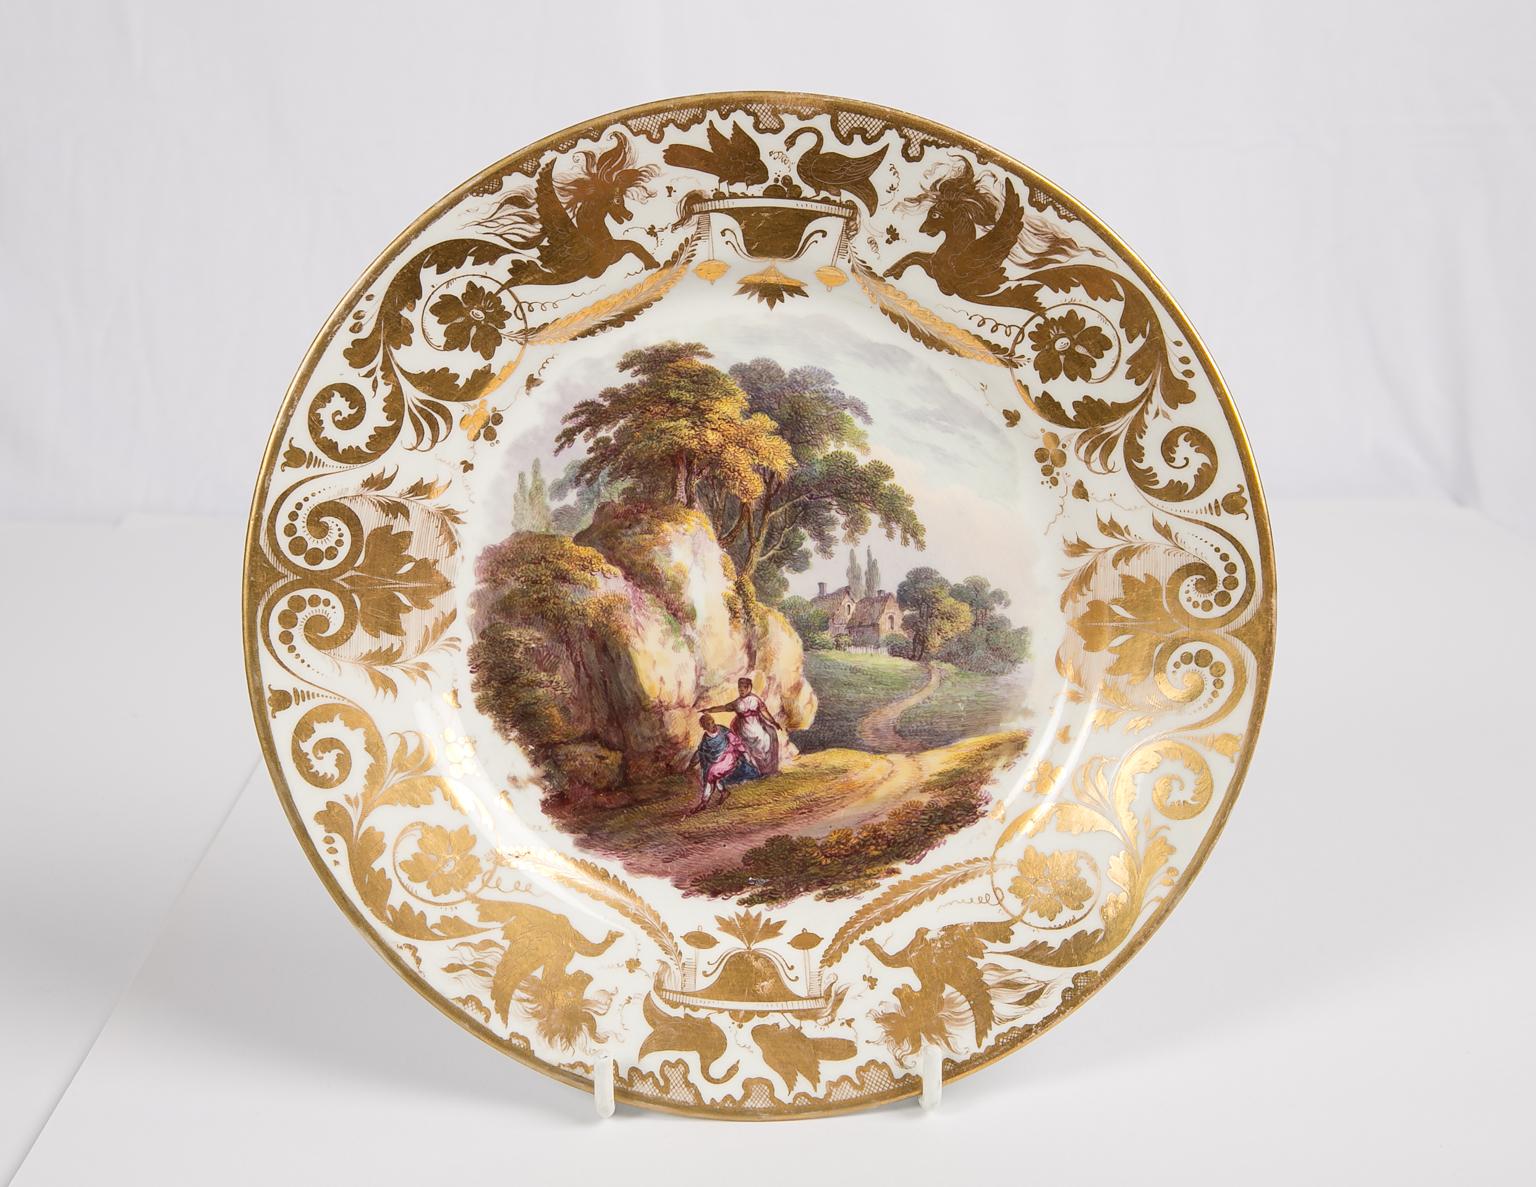 Antique Porcelain Dishes with Hand-Painted Landscape Scenes 1